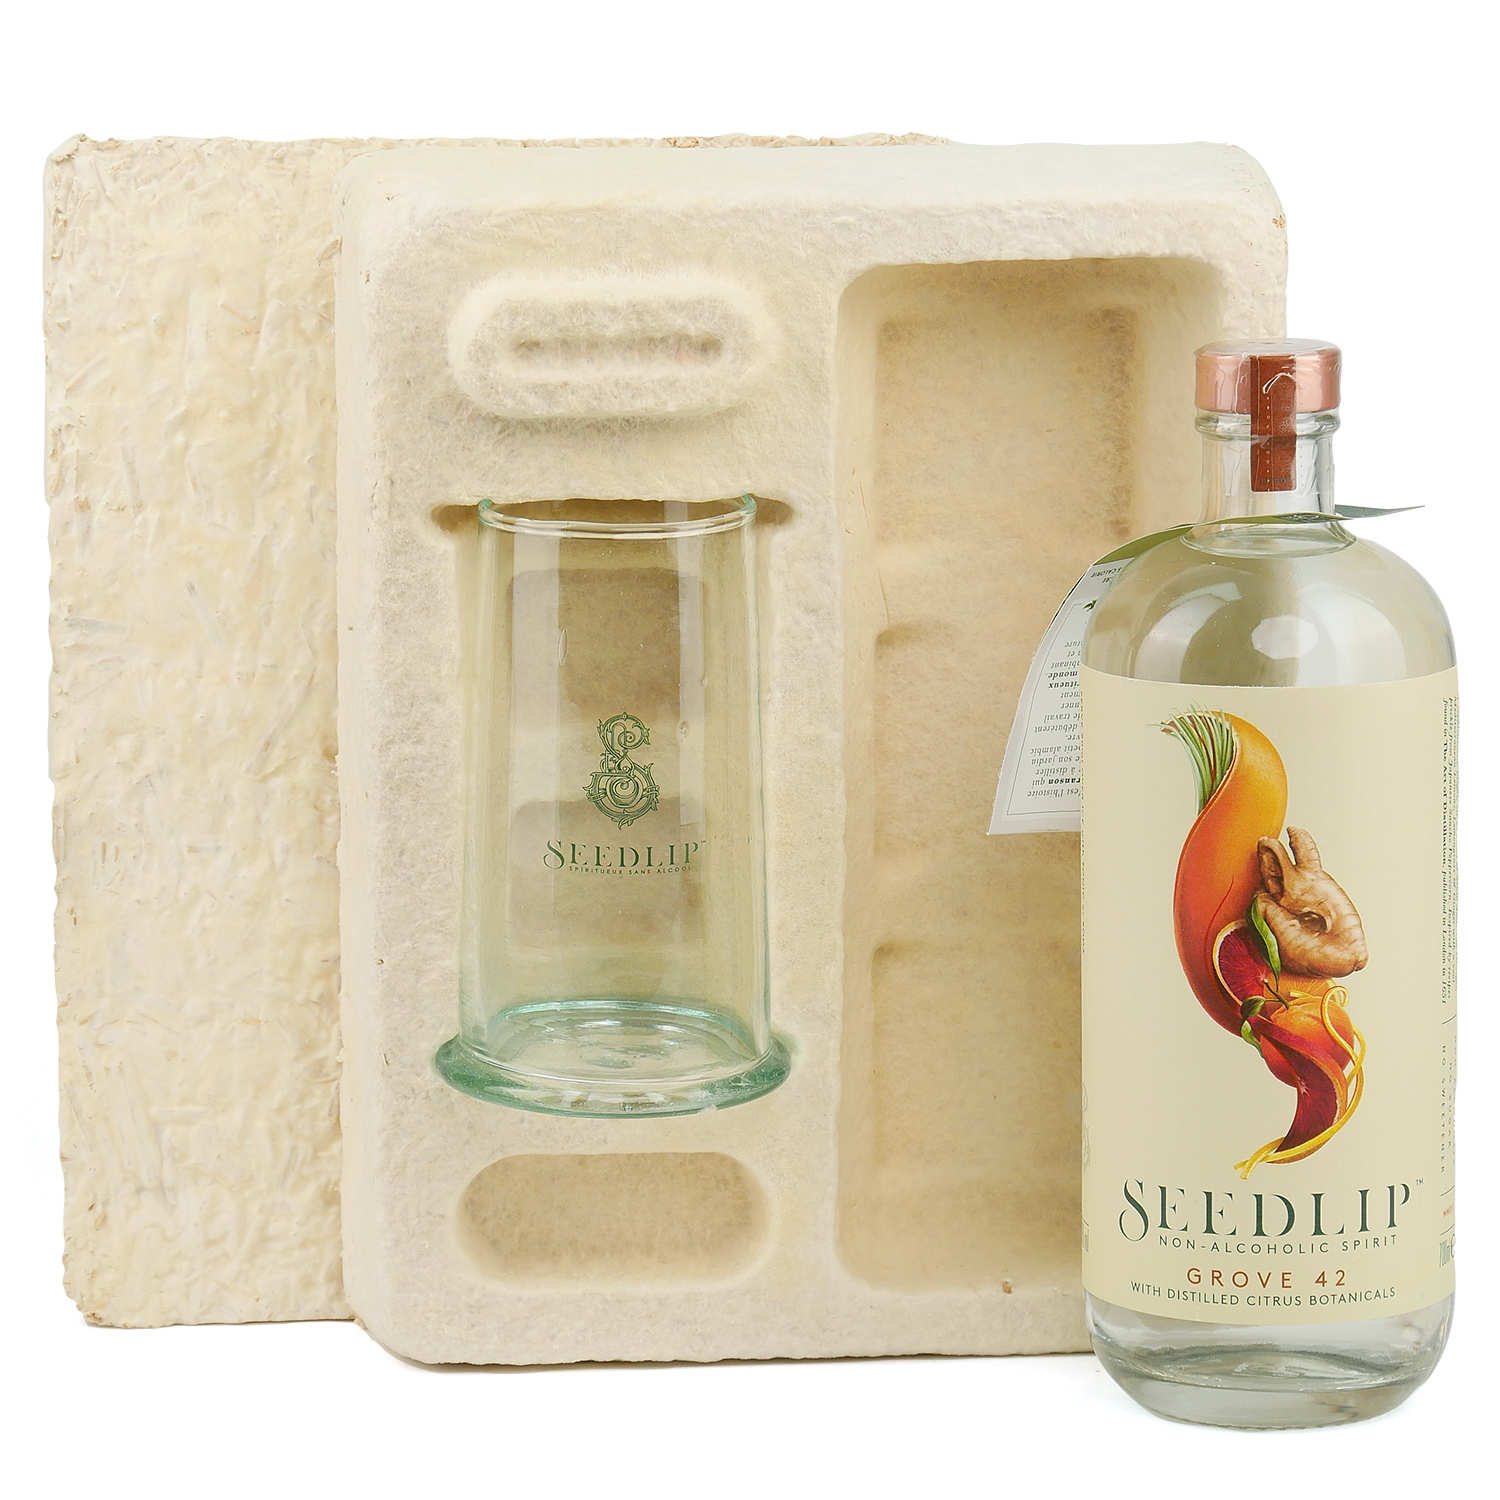 Seedlip Grove 42 - Gift Box With 1 Glass - Seedlip